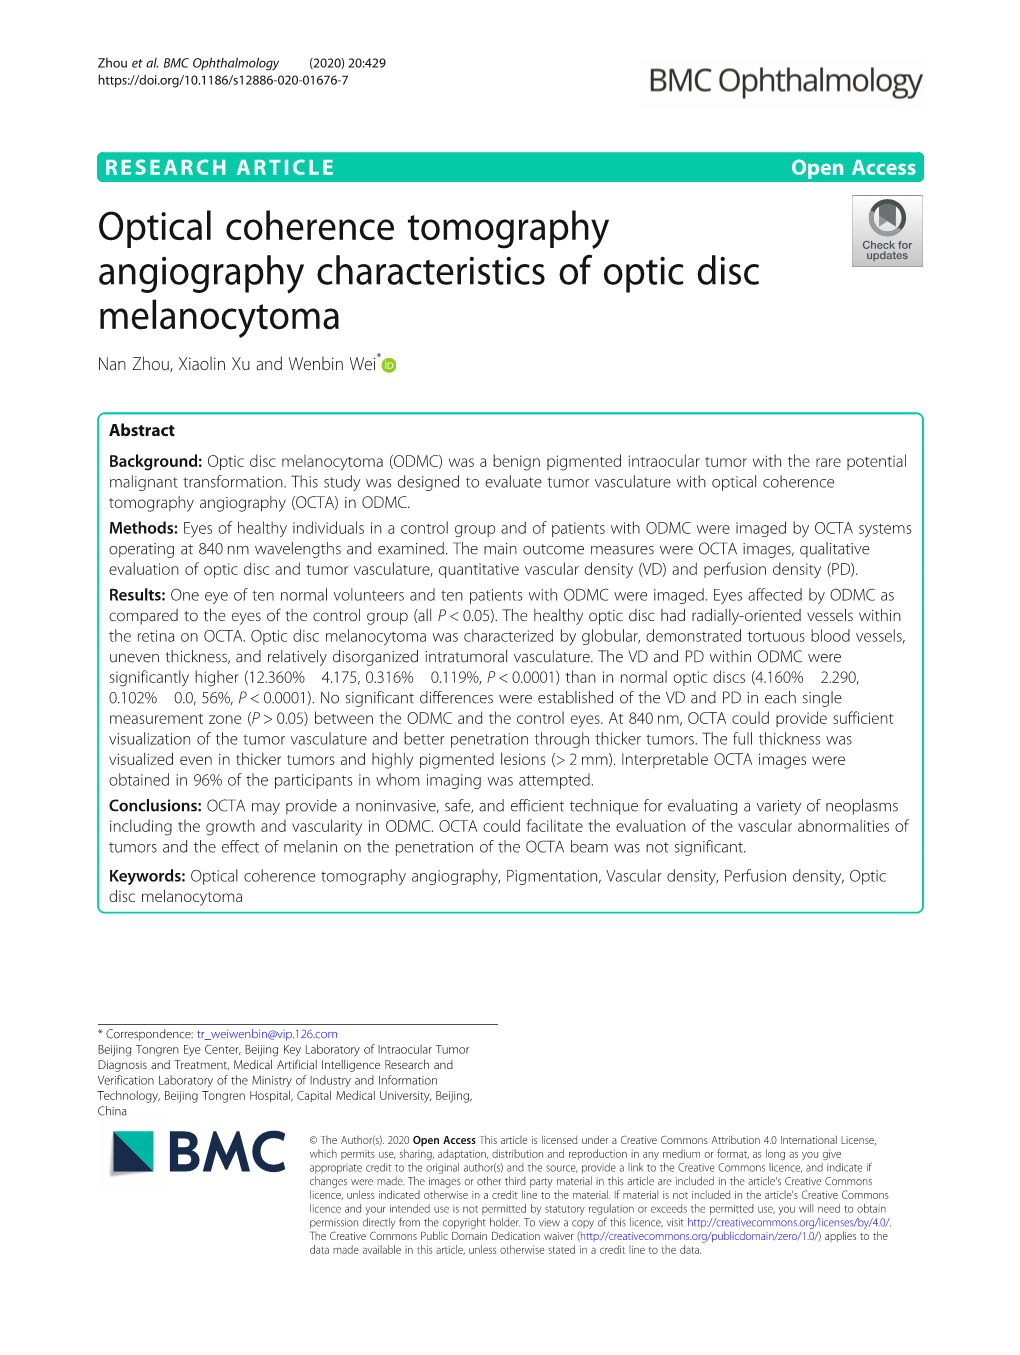 Optical Coherence Tomography Angiography Characteristics of Optic Disc Melanocytoma Nan Zhou, Xiaolin Xu and Wenbin Wei*